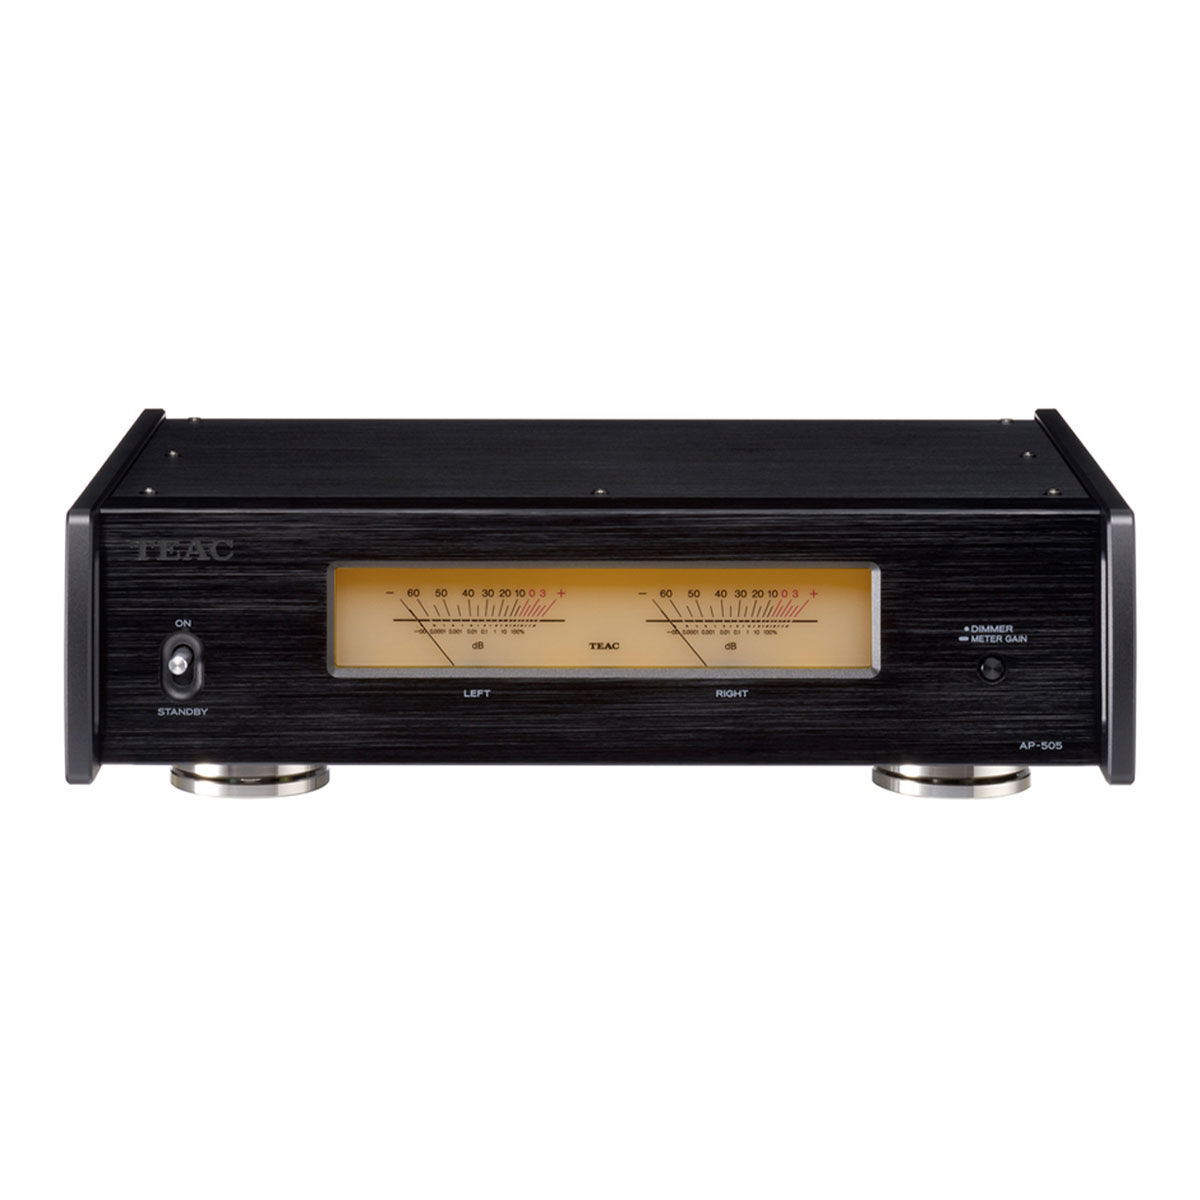 Teac AP-505 Stereo Power Amplifier - Black